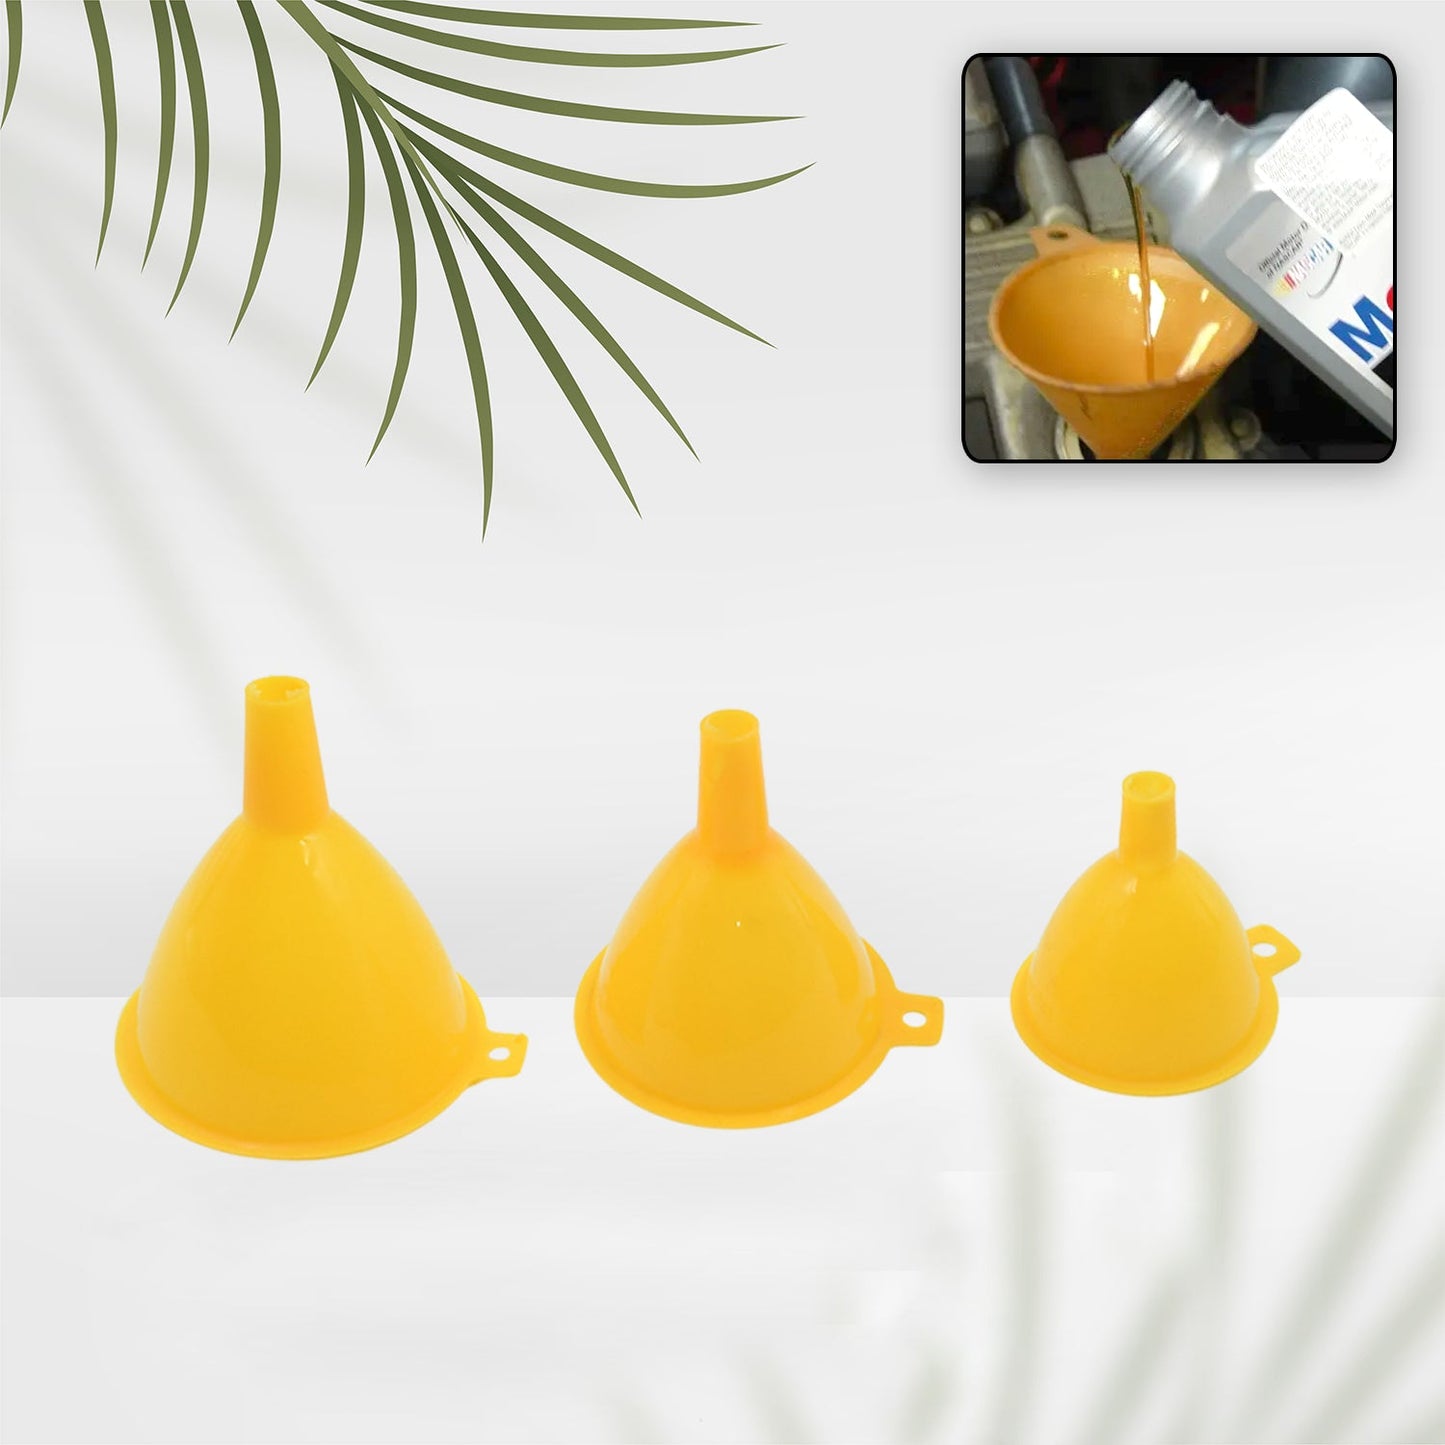 7980 Multipurpose Funnel 3 Size Small , Medium & Big Plastic Funnel For kitchen and laboratory Use (3 Pc Set)